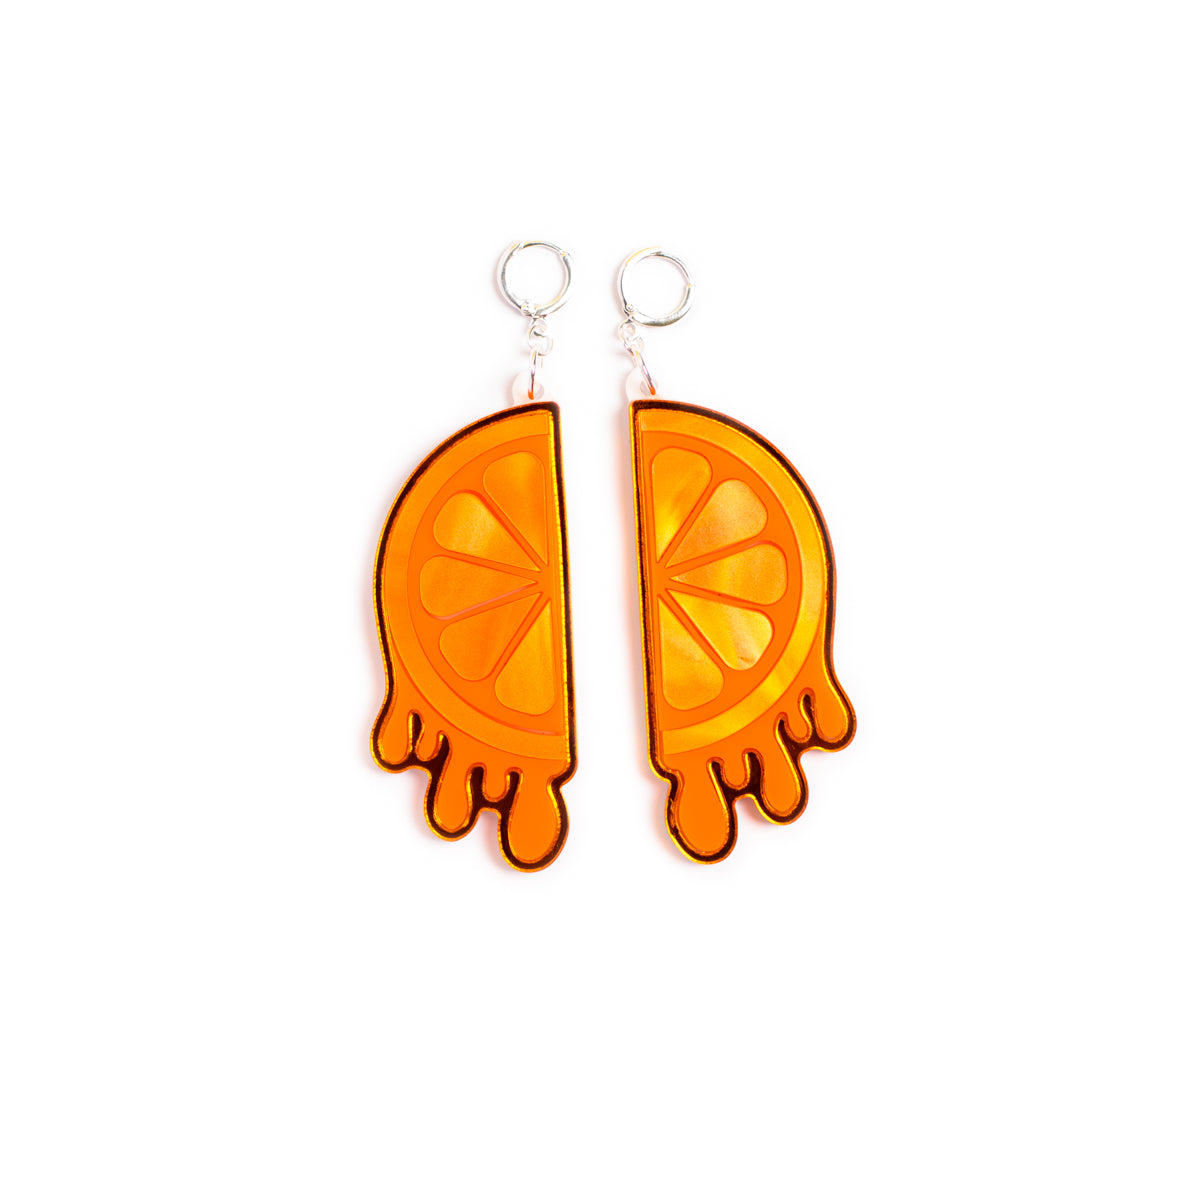 The Orange Earrings